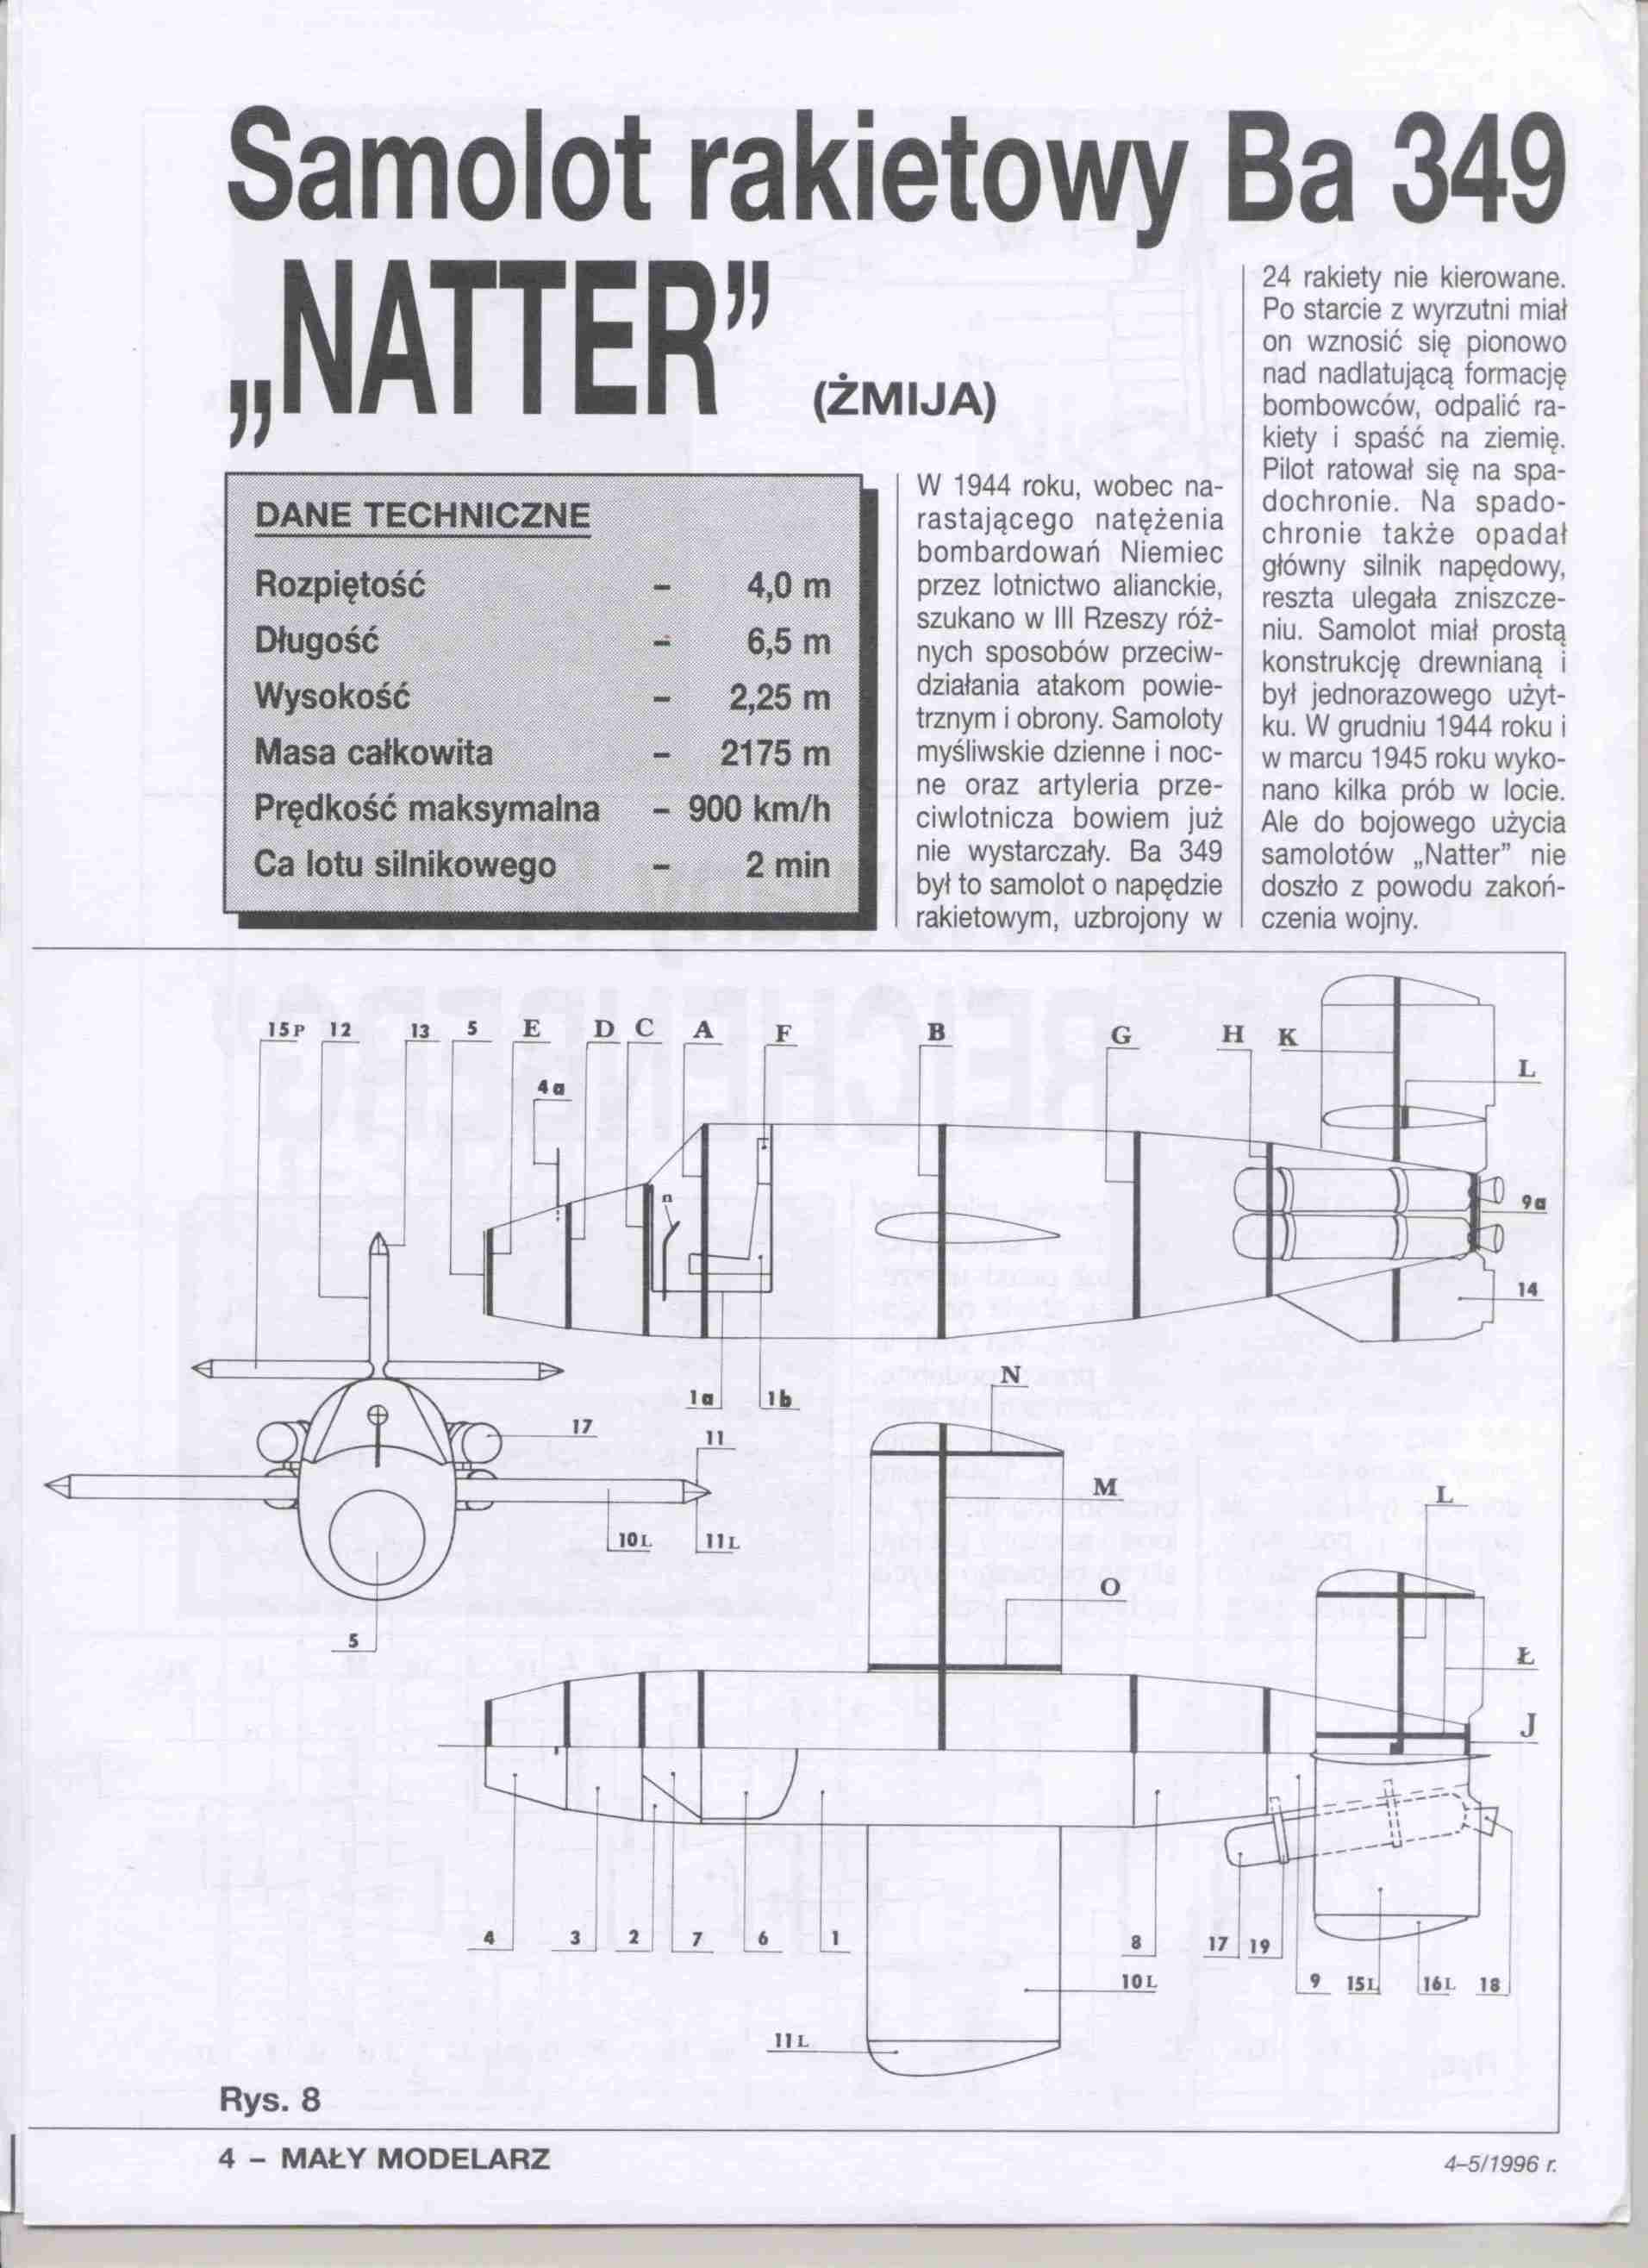 "Maly Modelarz" 4-5, 1996, 4 c.